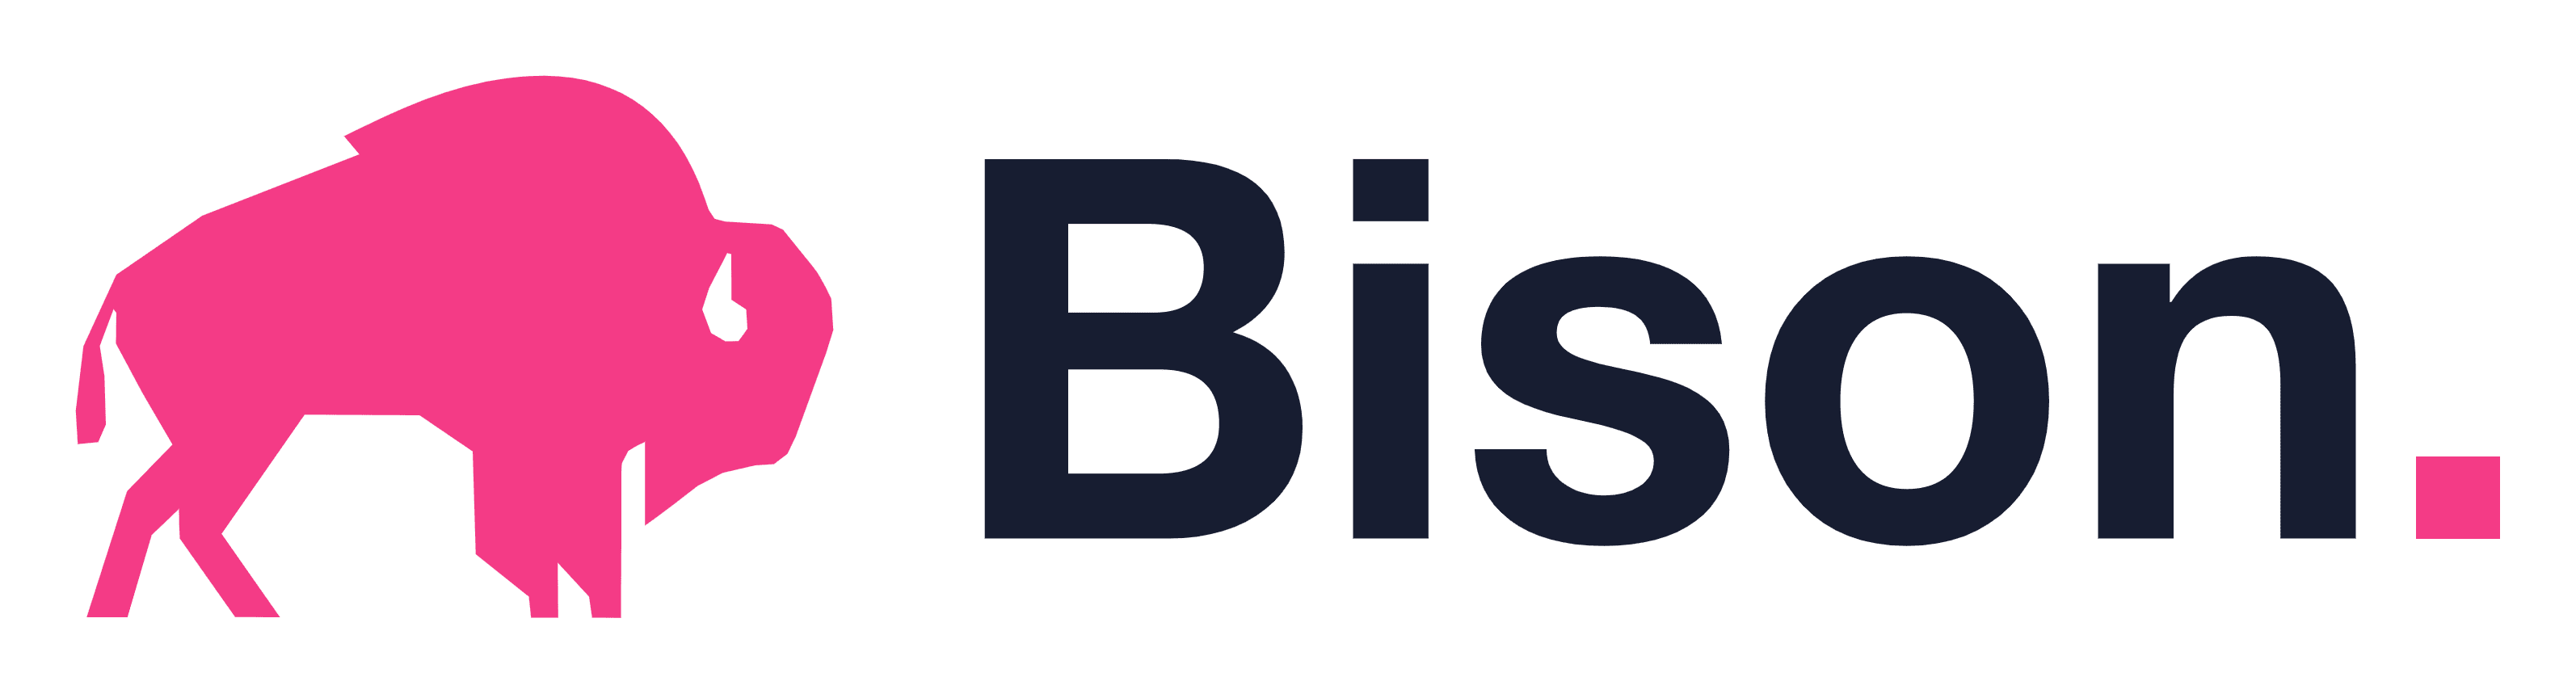 Bison Resourcing Solutions Ltd